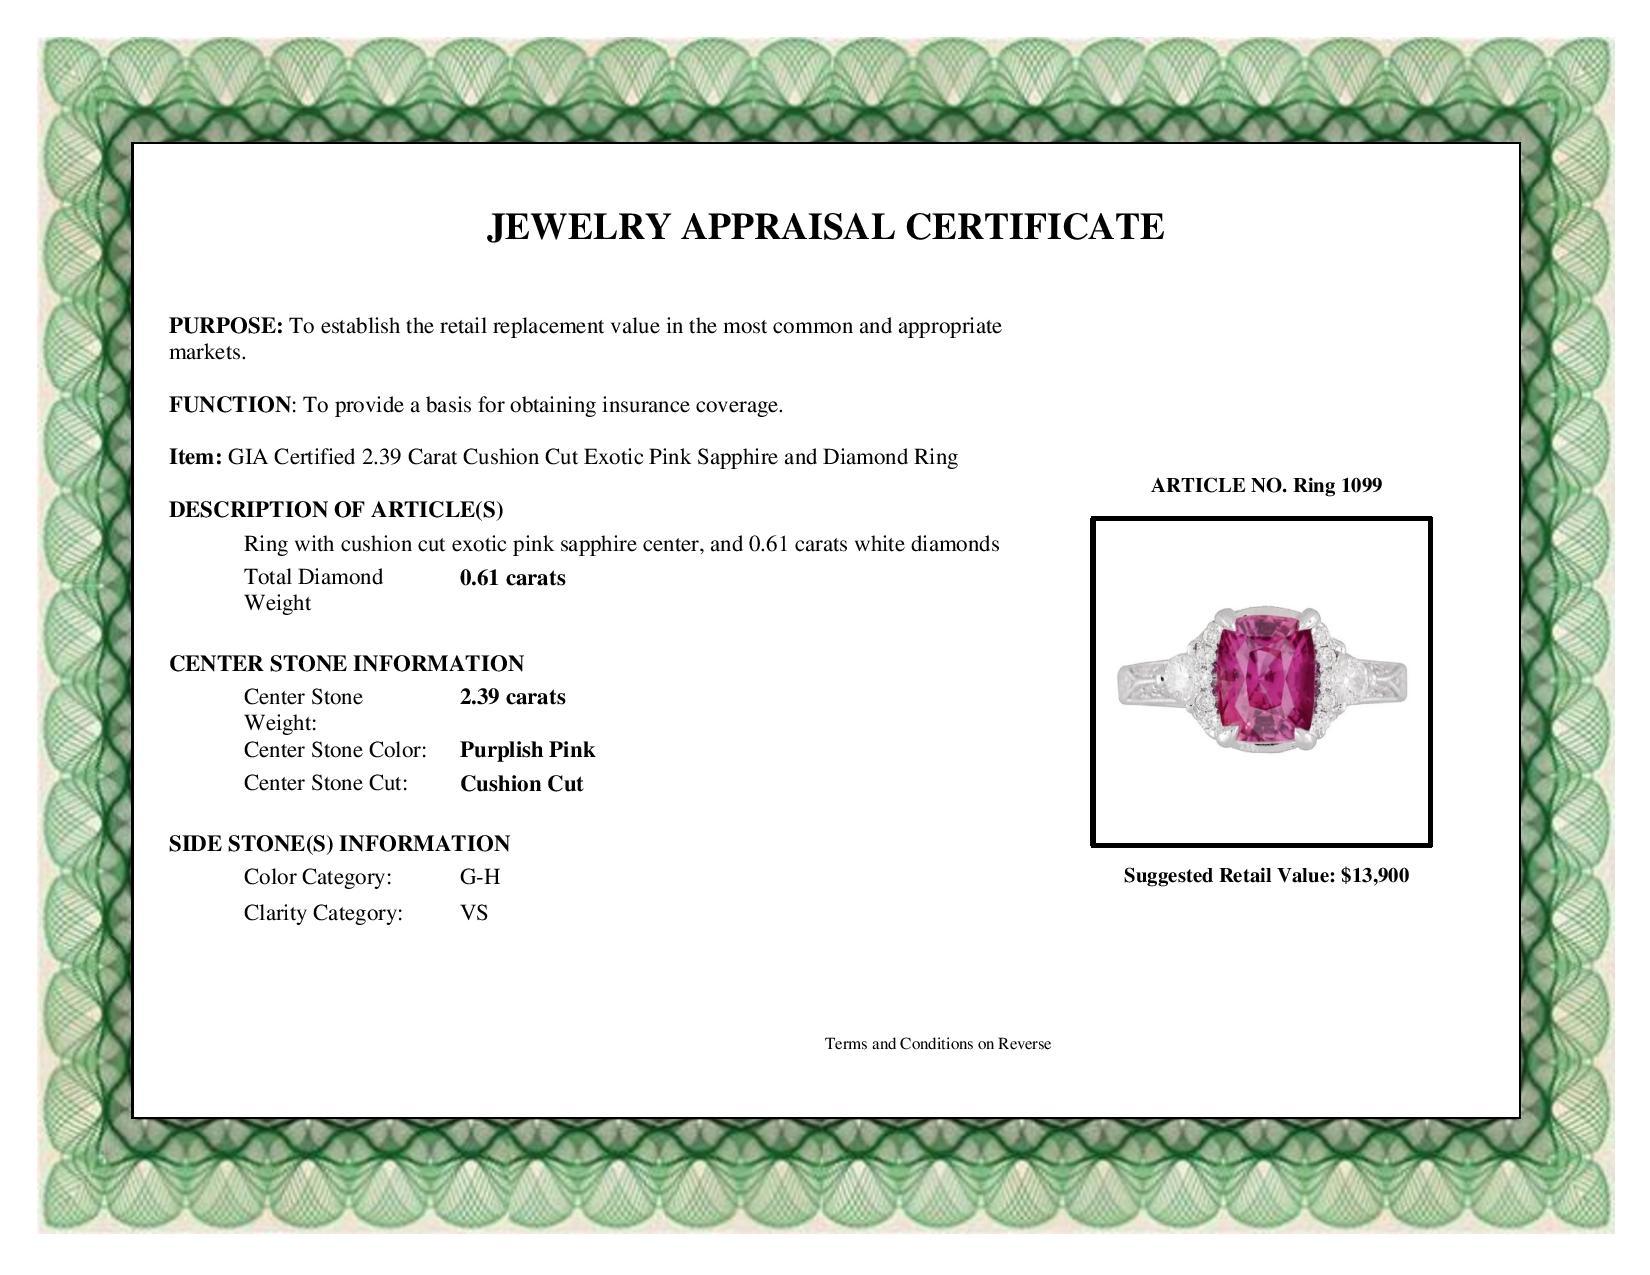 DiamondTown GIA Certified 2.39 Carat Cushion Cut Exotic Pink Sapphire Ring 1